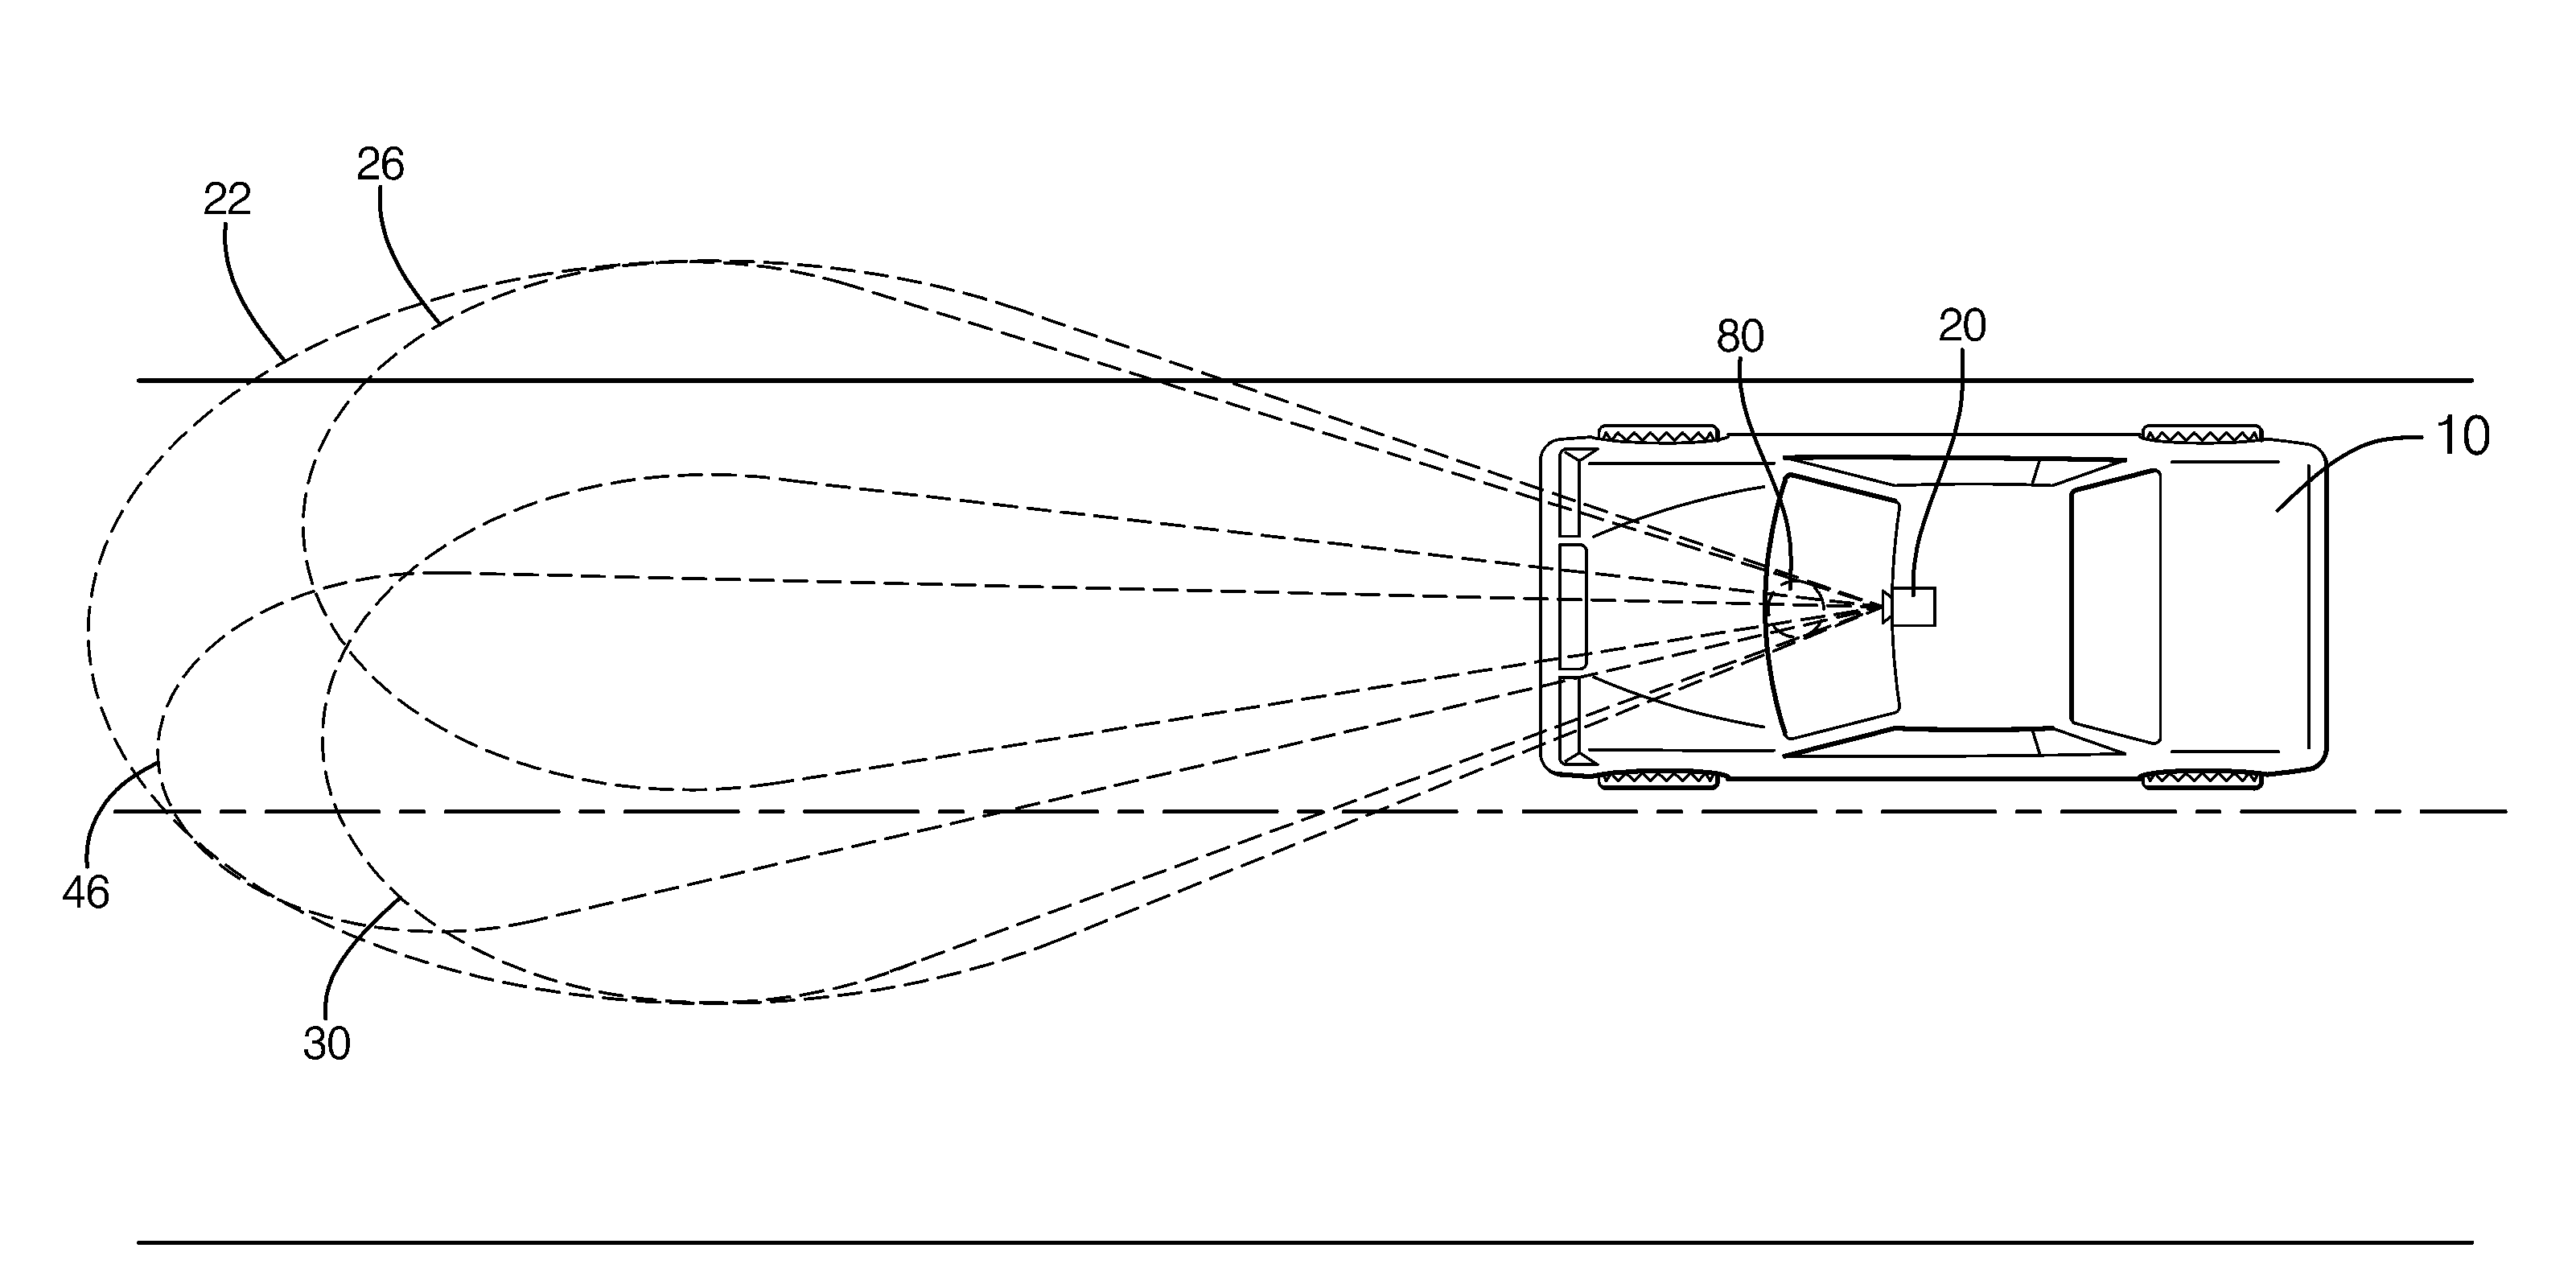 Vehicle optical sensor system